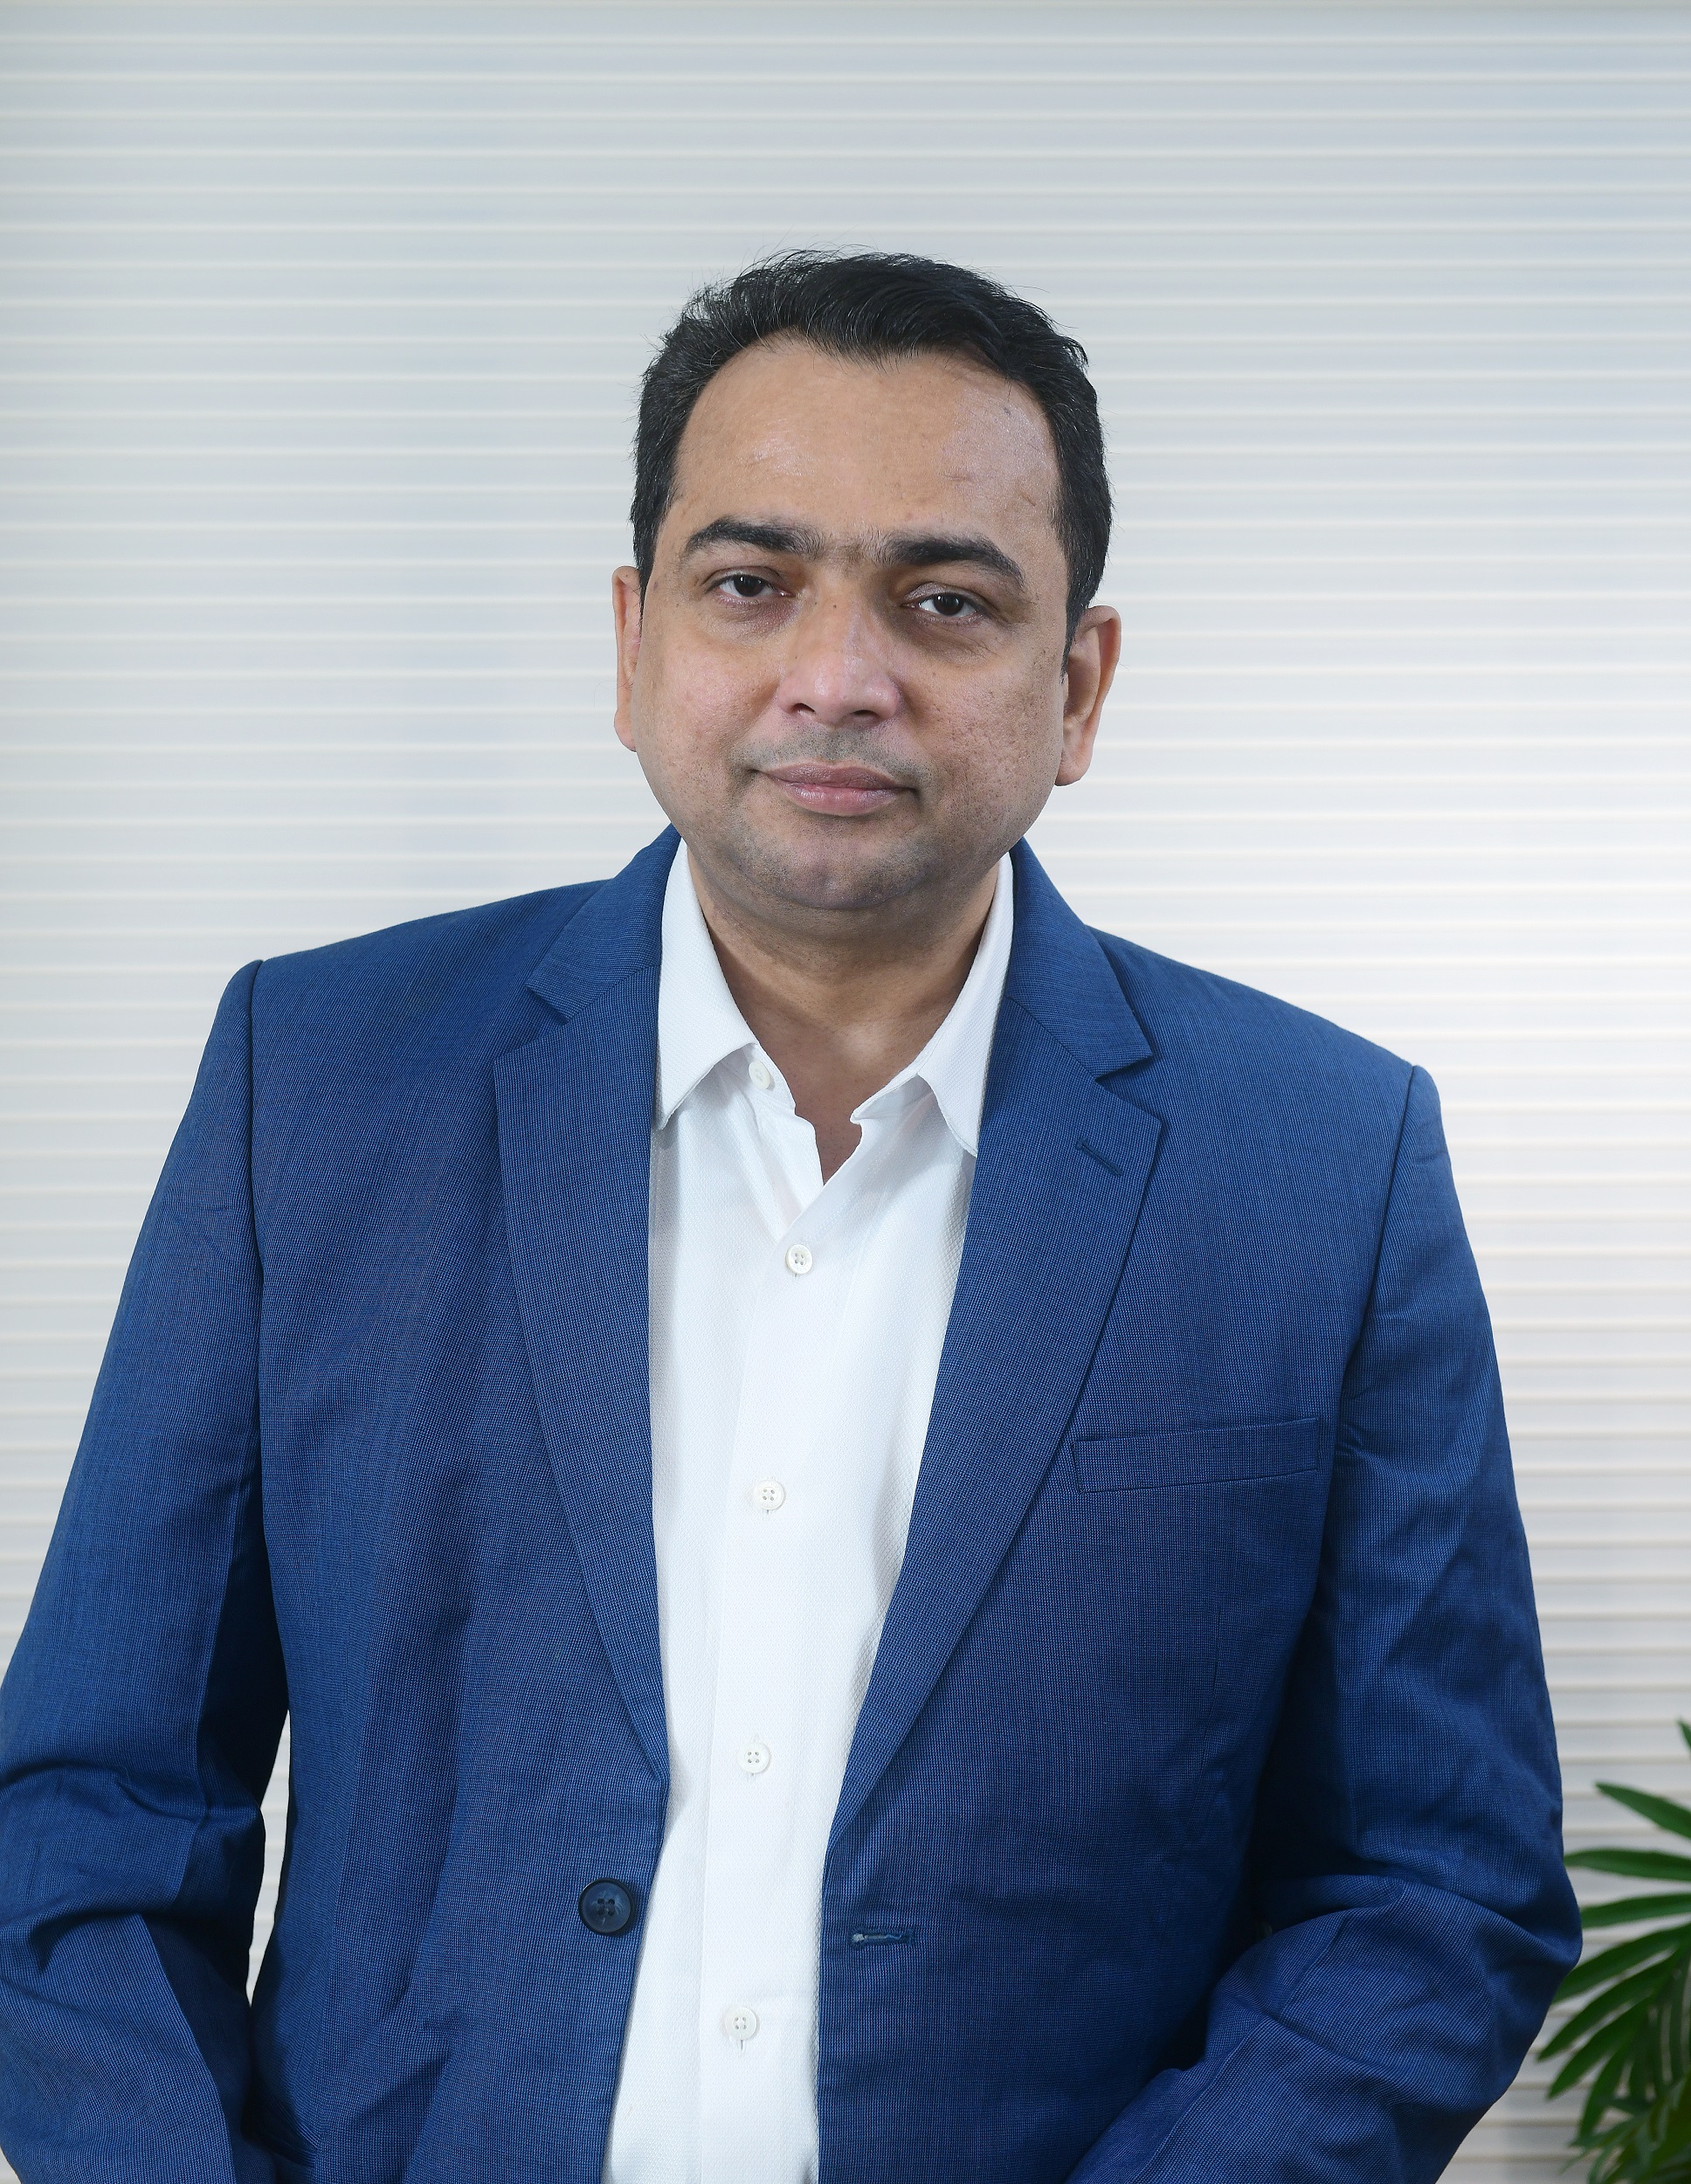 Sachidanand Upadhyay先生，Lords Mark Industries Pvt Ltd.董事总经理兼首席执行官。